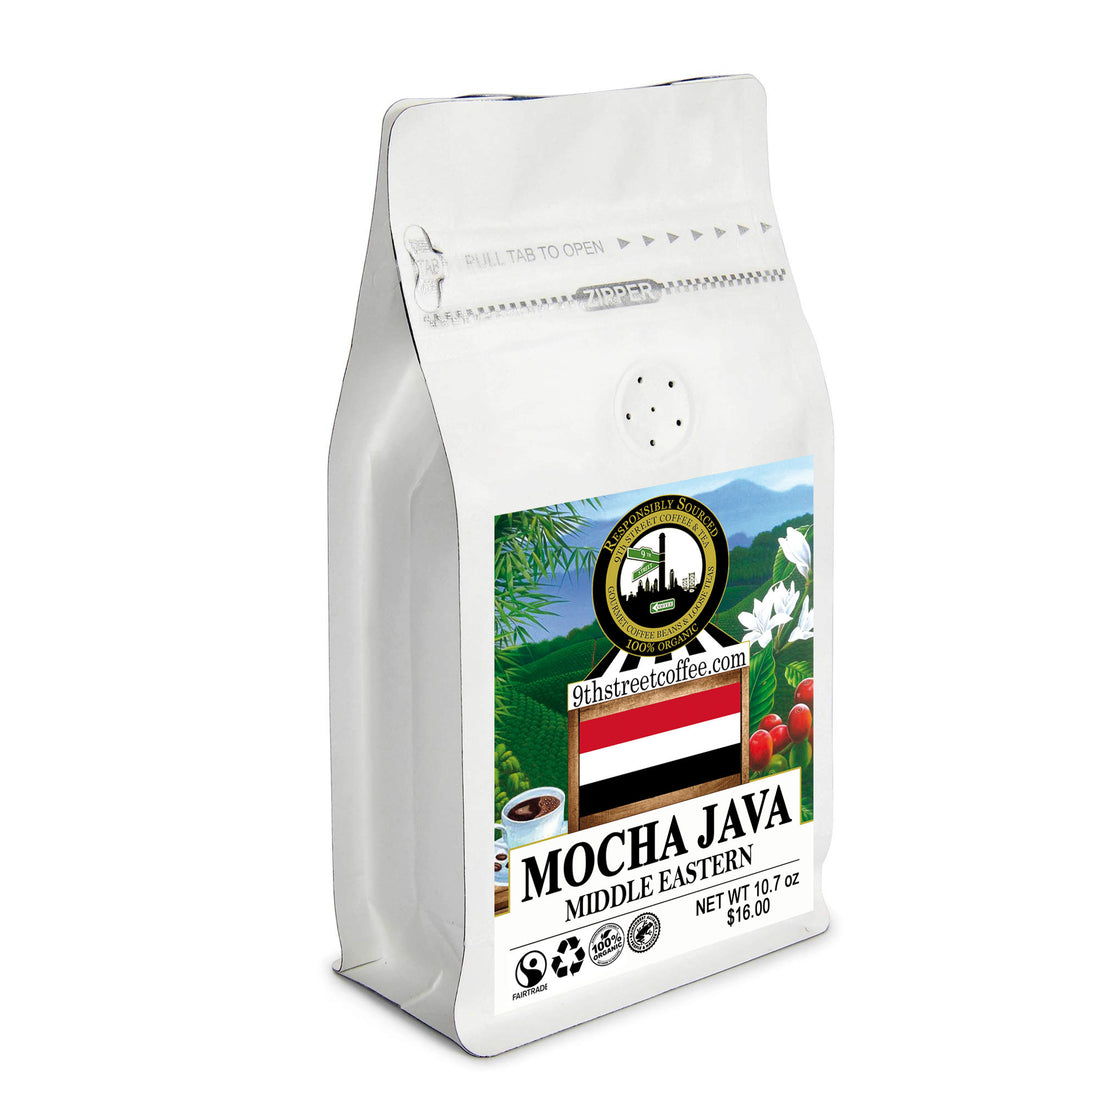 Salaam Arabica Coffee, café, Jajjah